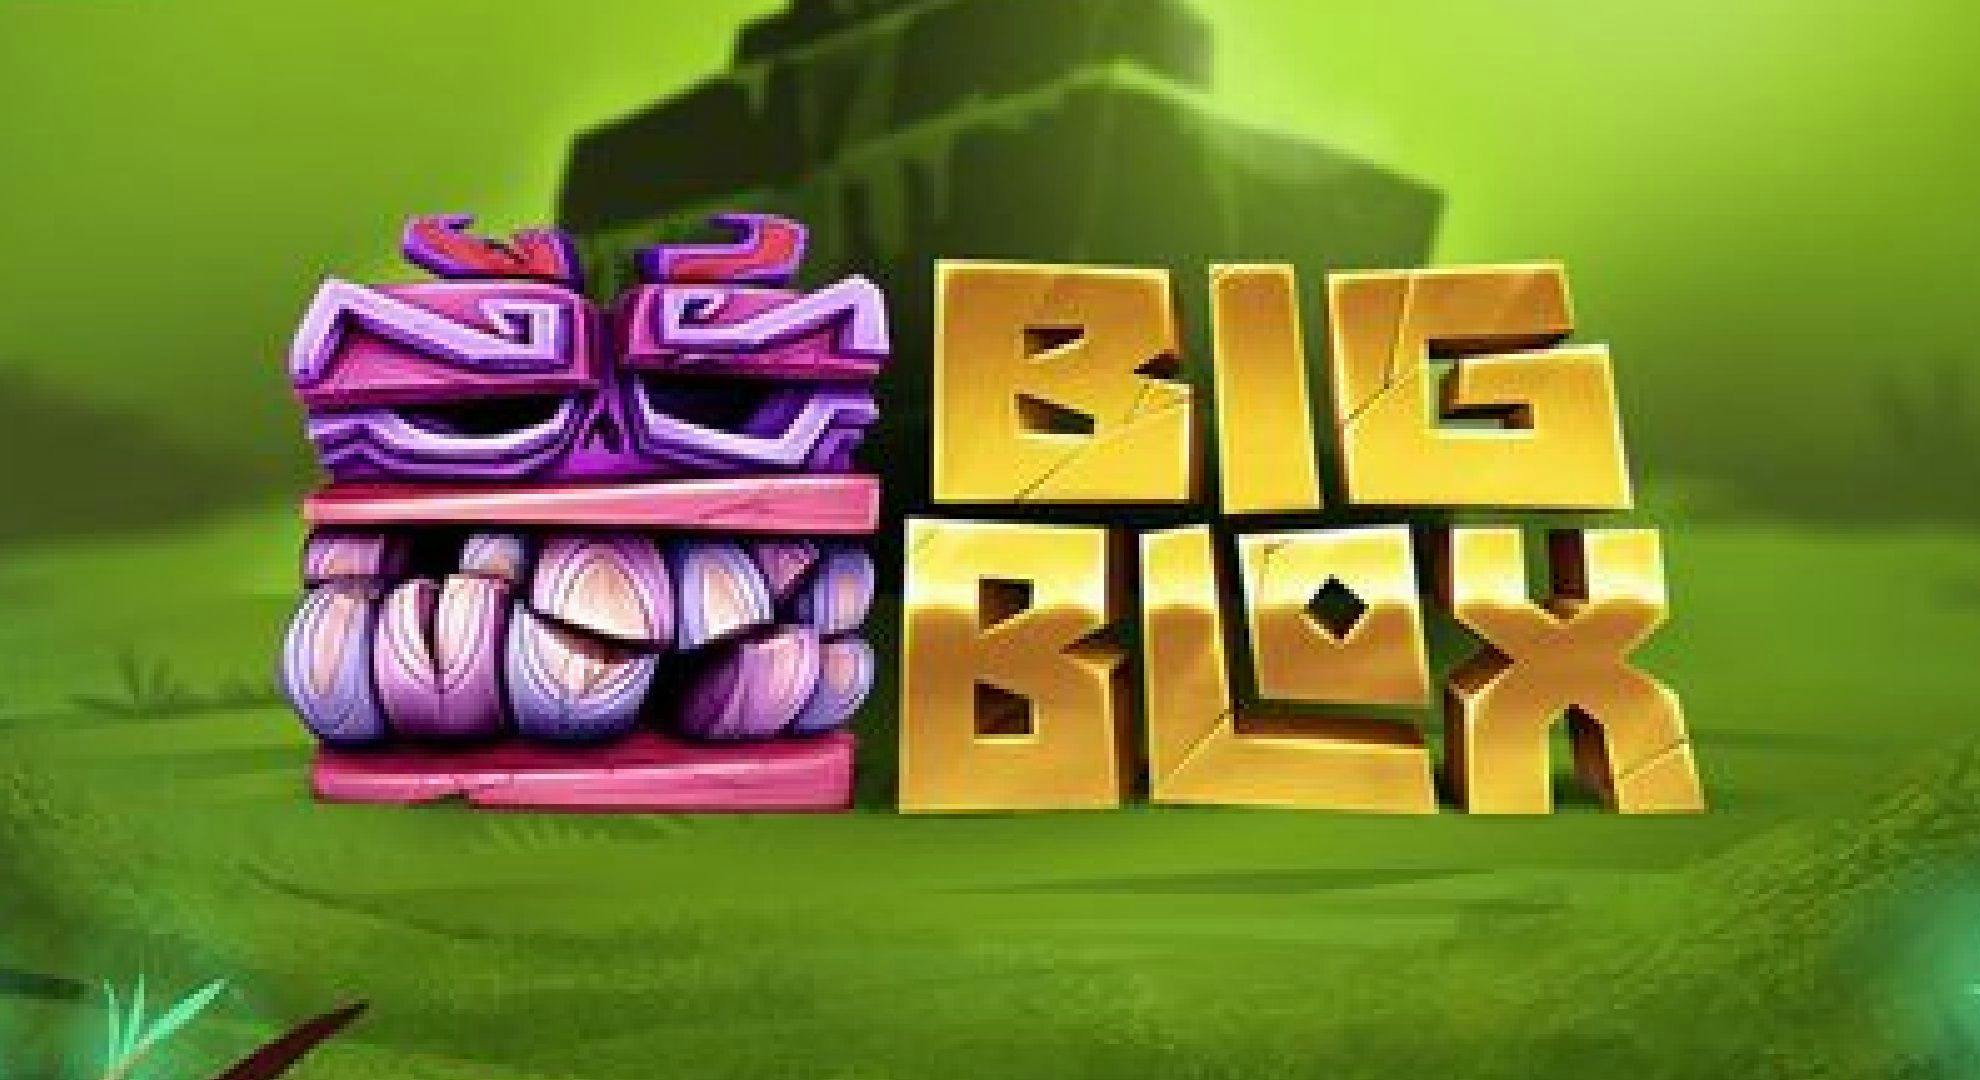 Big Blox Slot Online Free Play